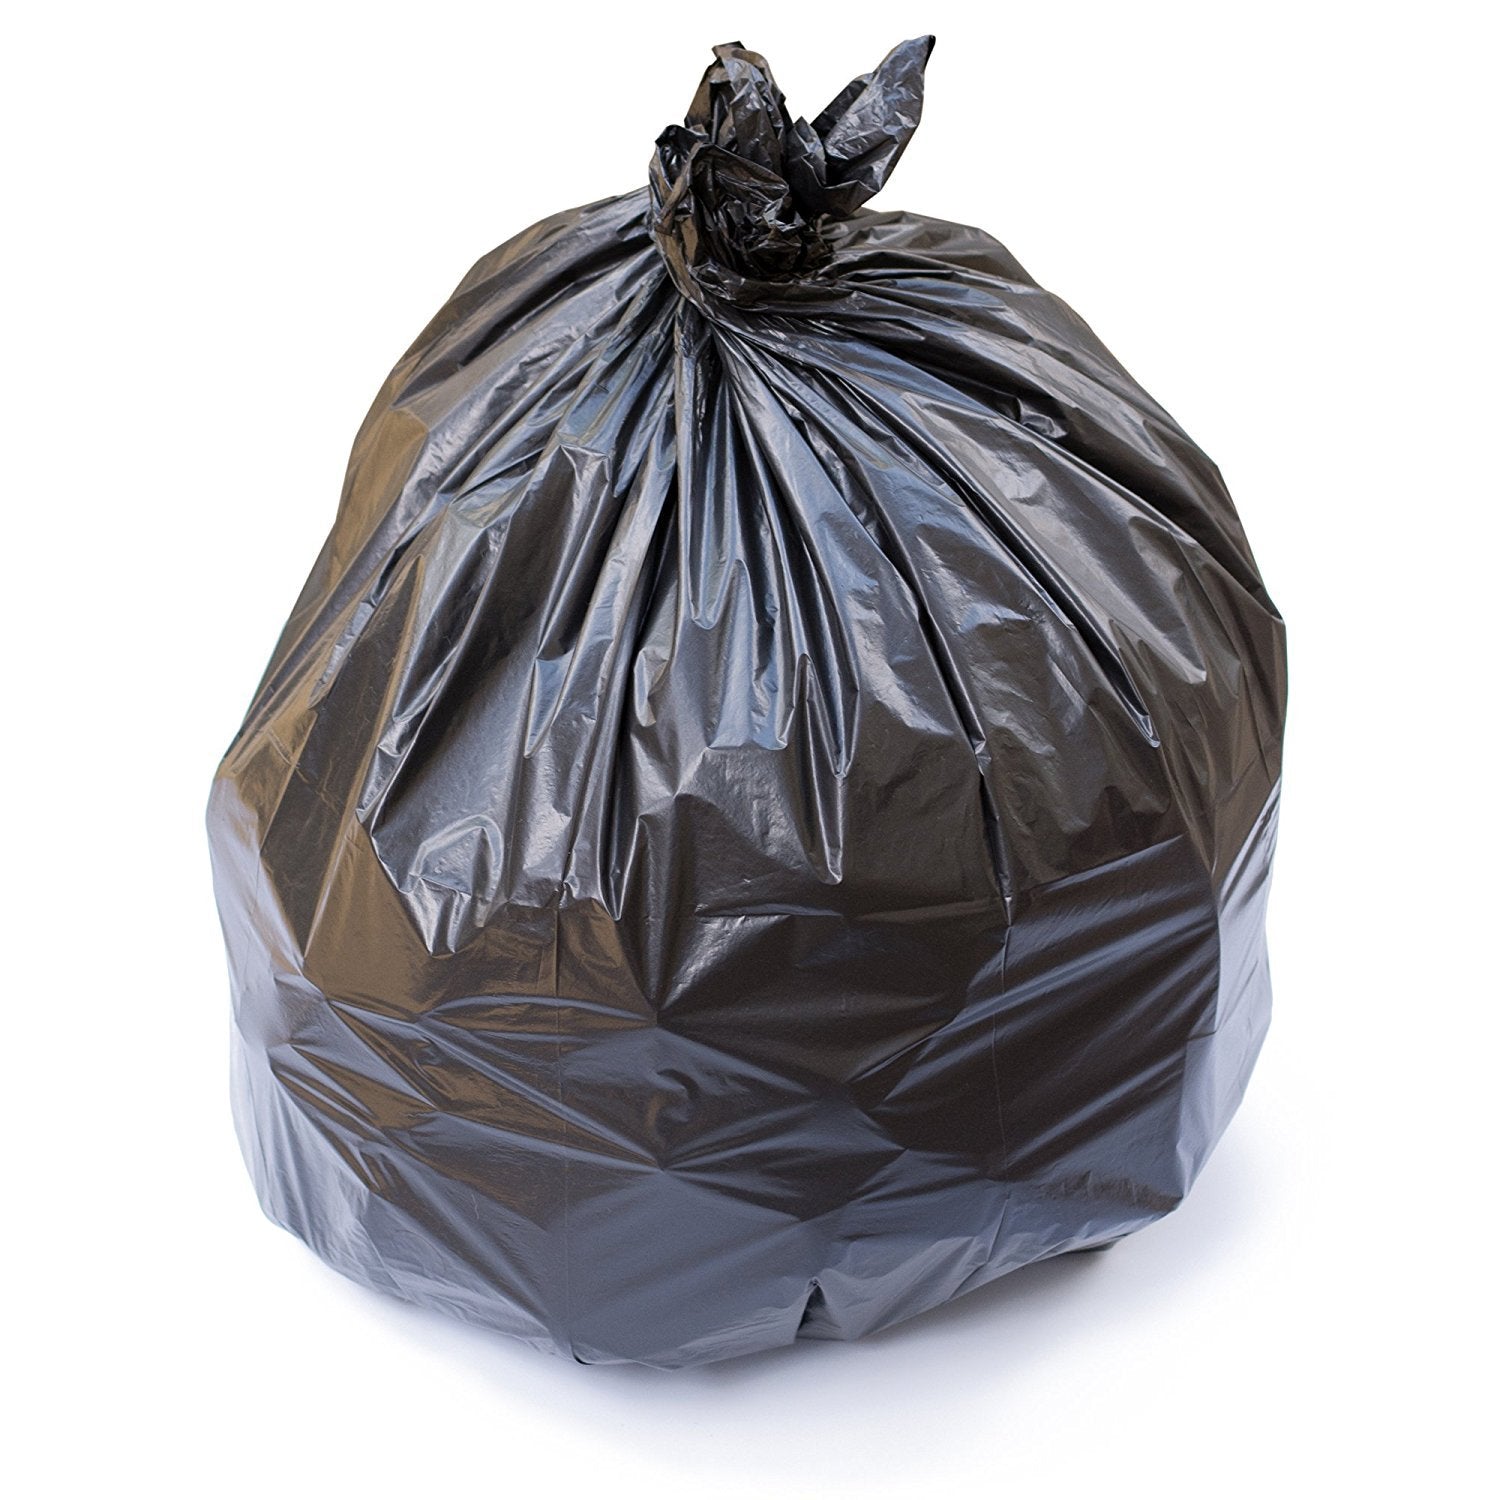 Temporary plain black council rubbish bags